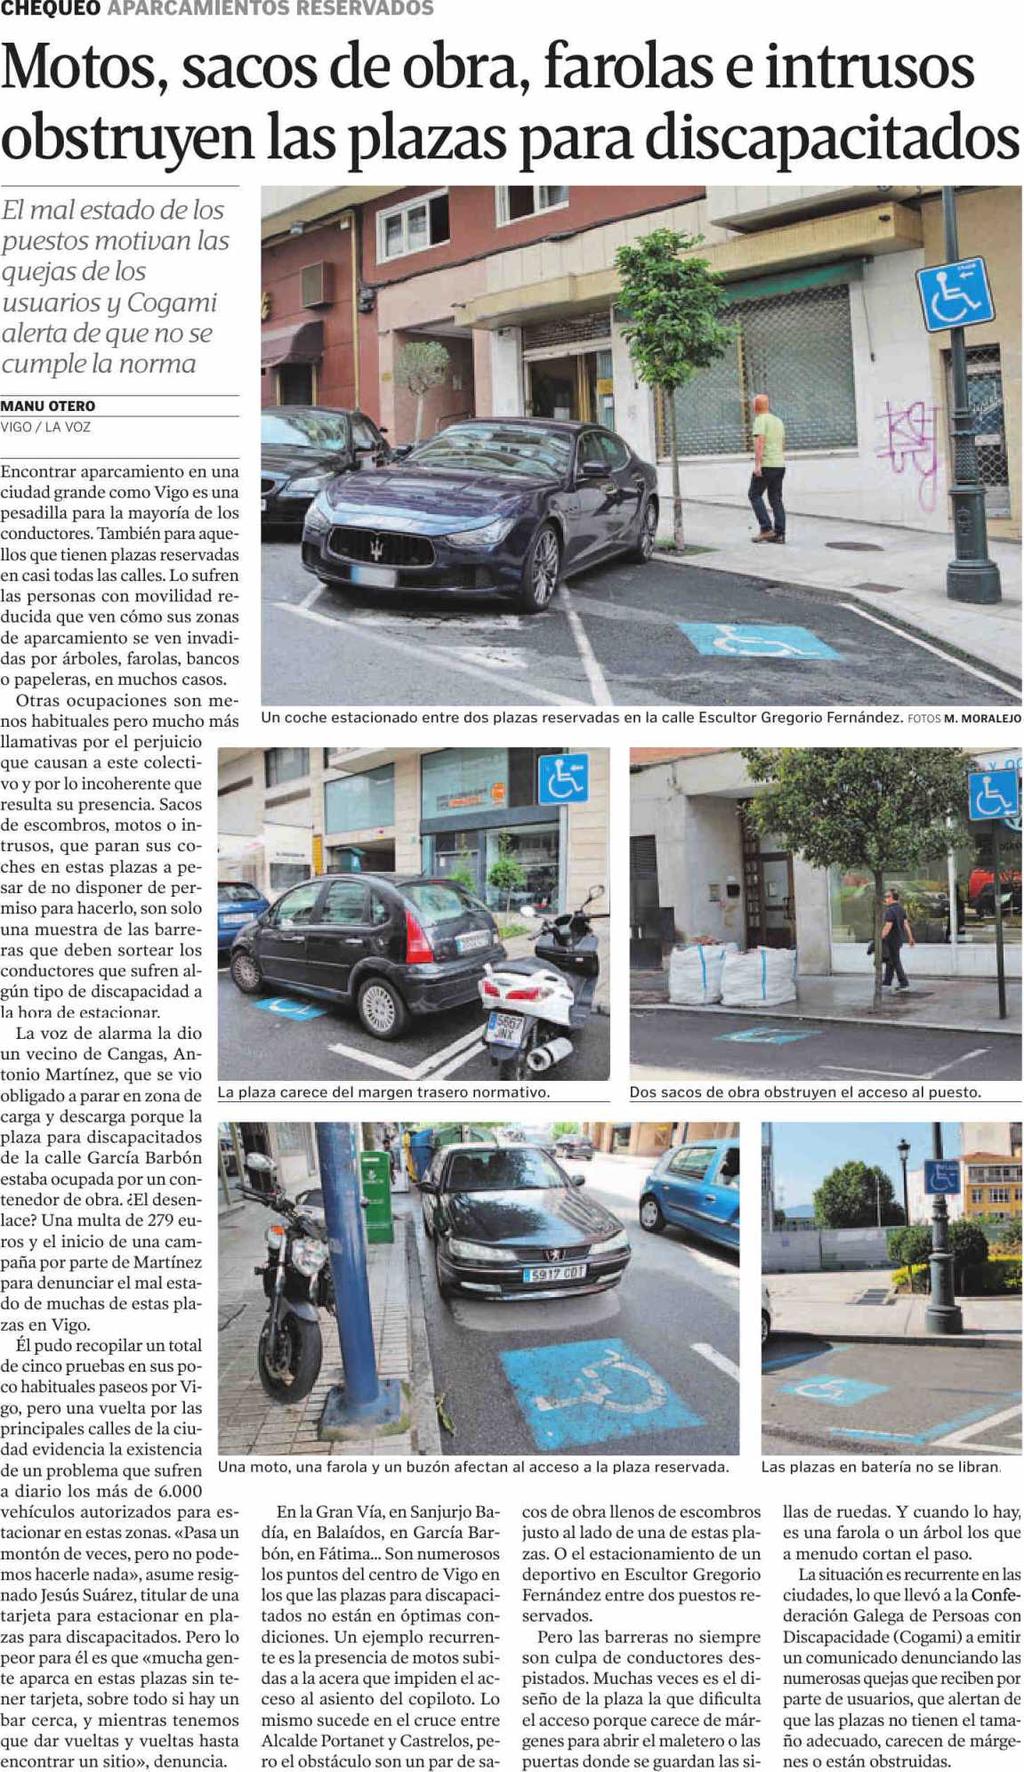 La Voz de Galicia (Vigo) Pontevedra Prensa: Tirada: Difusión: